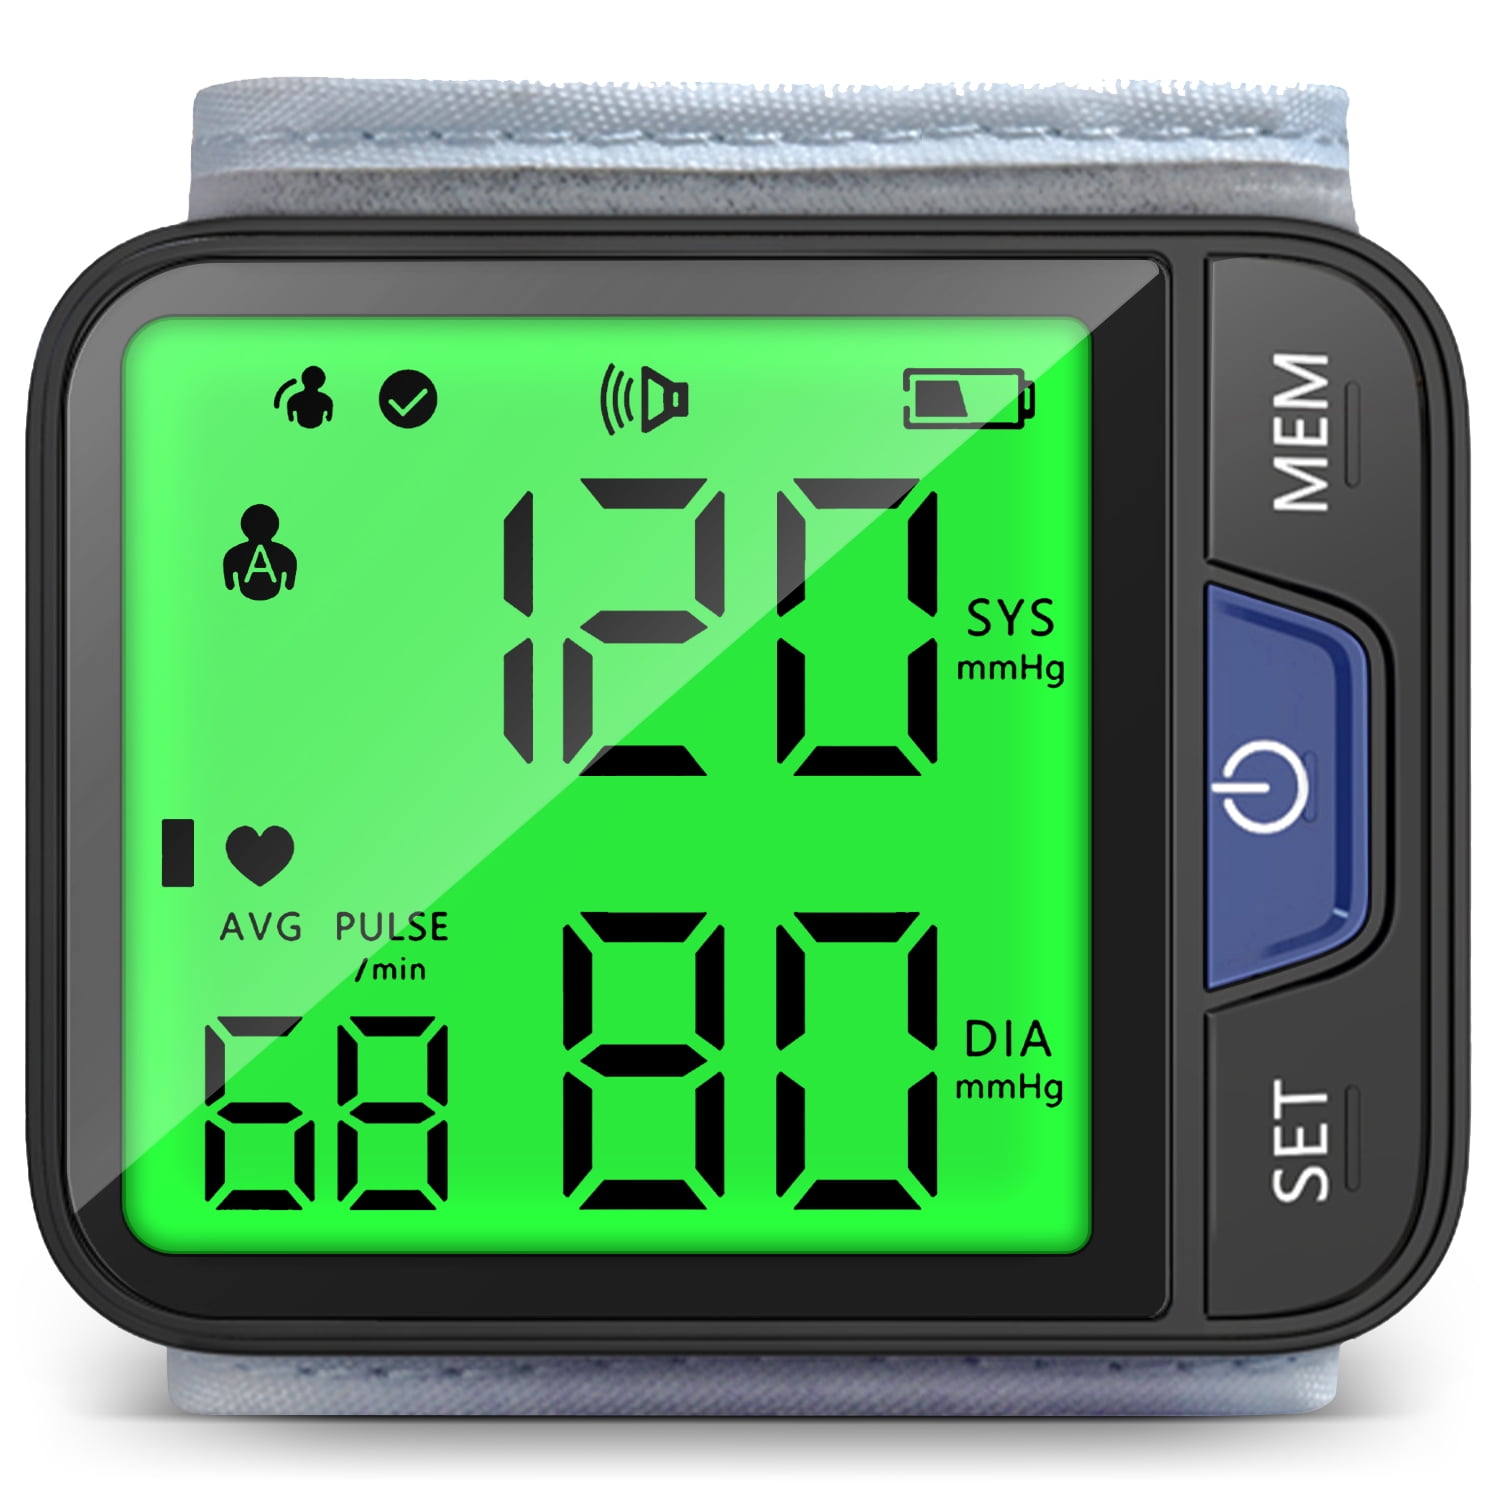  iHealth Push Wrist Blood Pressure Monitor, Digital